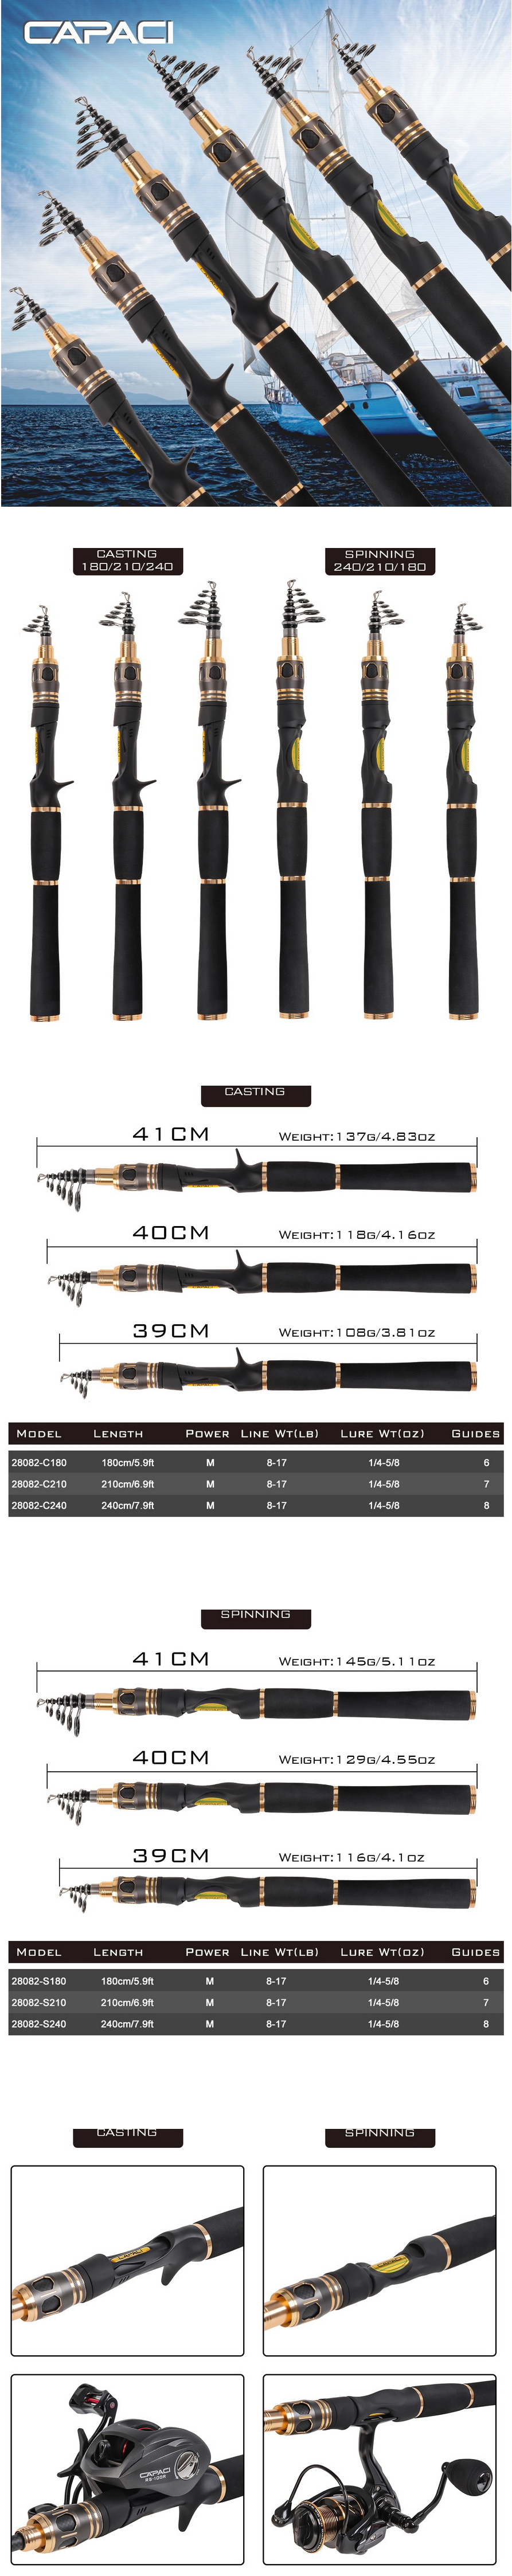 CAPACI-28082-RF-Series-Carbon-Alloy-Retractable-Fishing-Rod-Portable-Outdoor-Fishing-Pole-Fishing-Ac-1572325-1